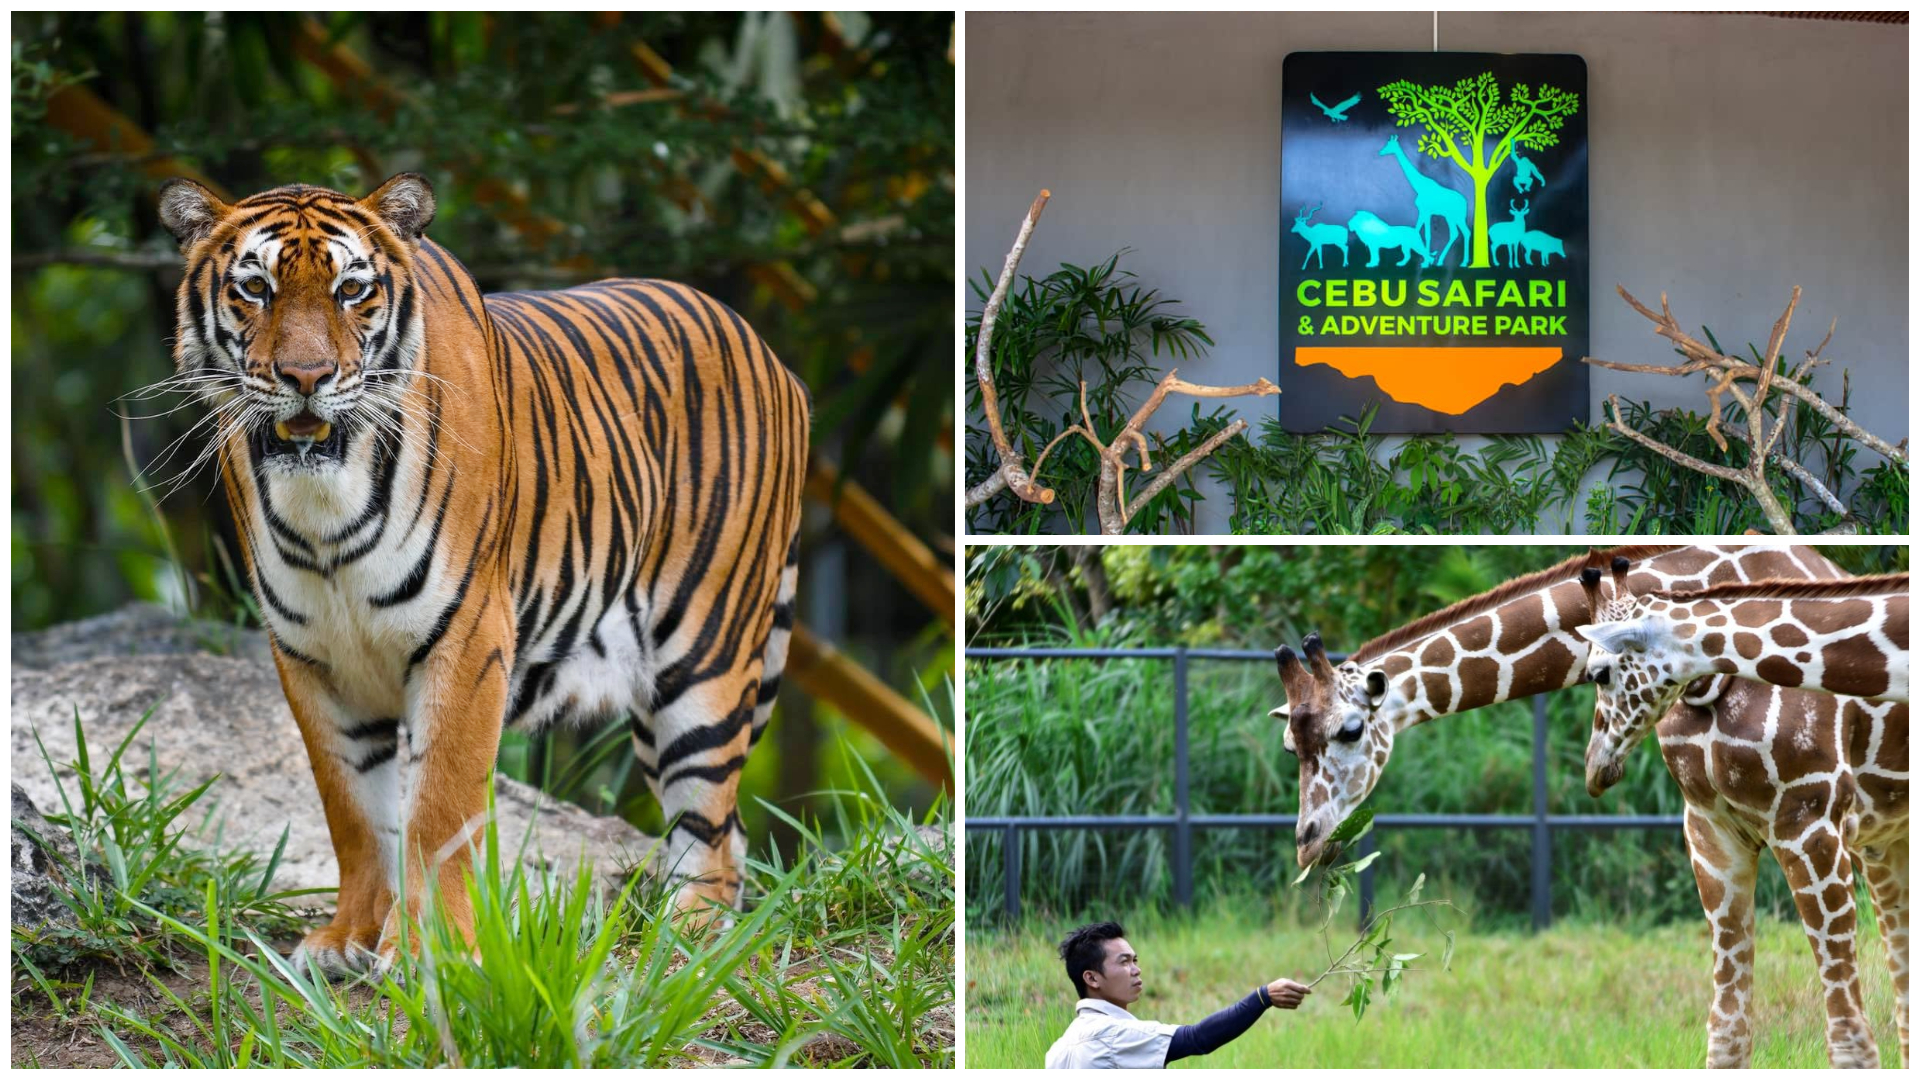 1 cebu safari adventure park reopening